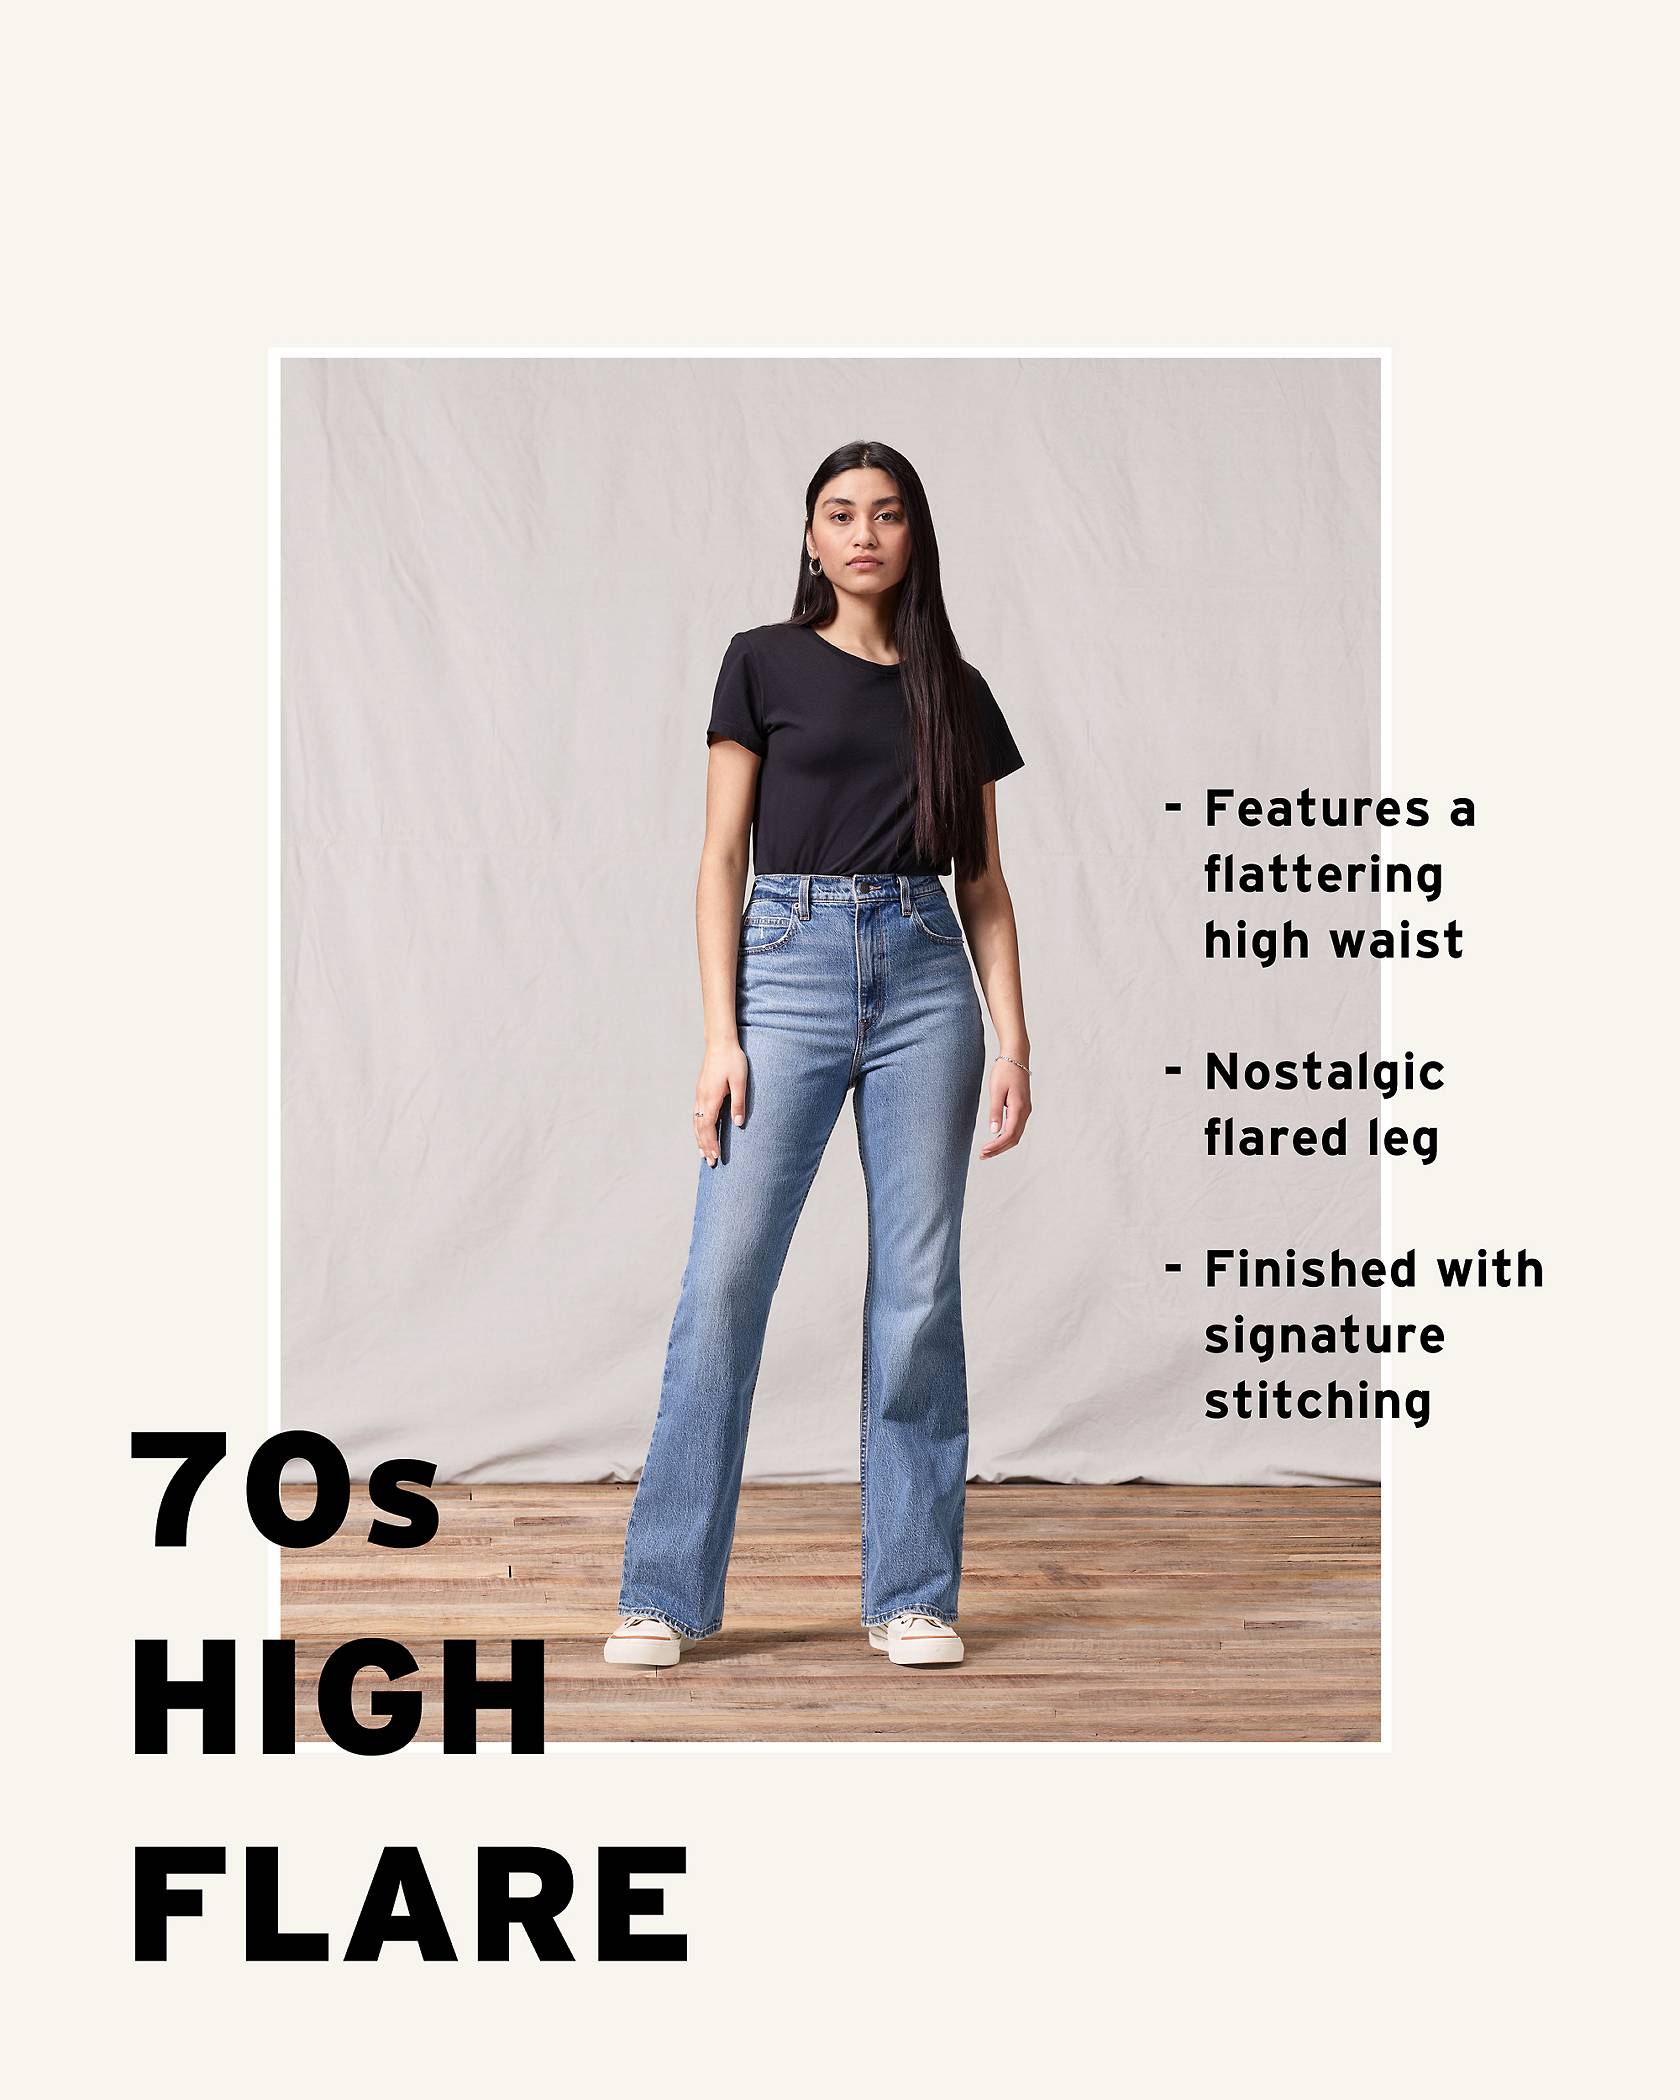 Model wearing a black tee shirt and medium wash 70s High Flare.